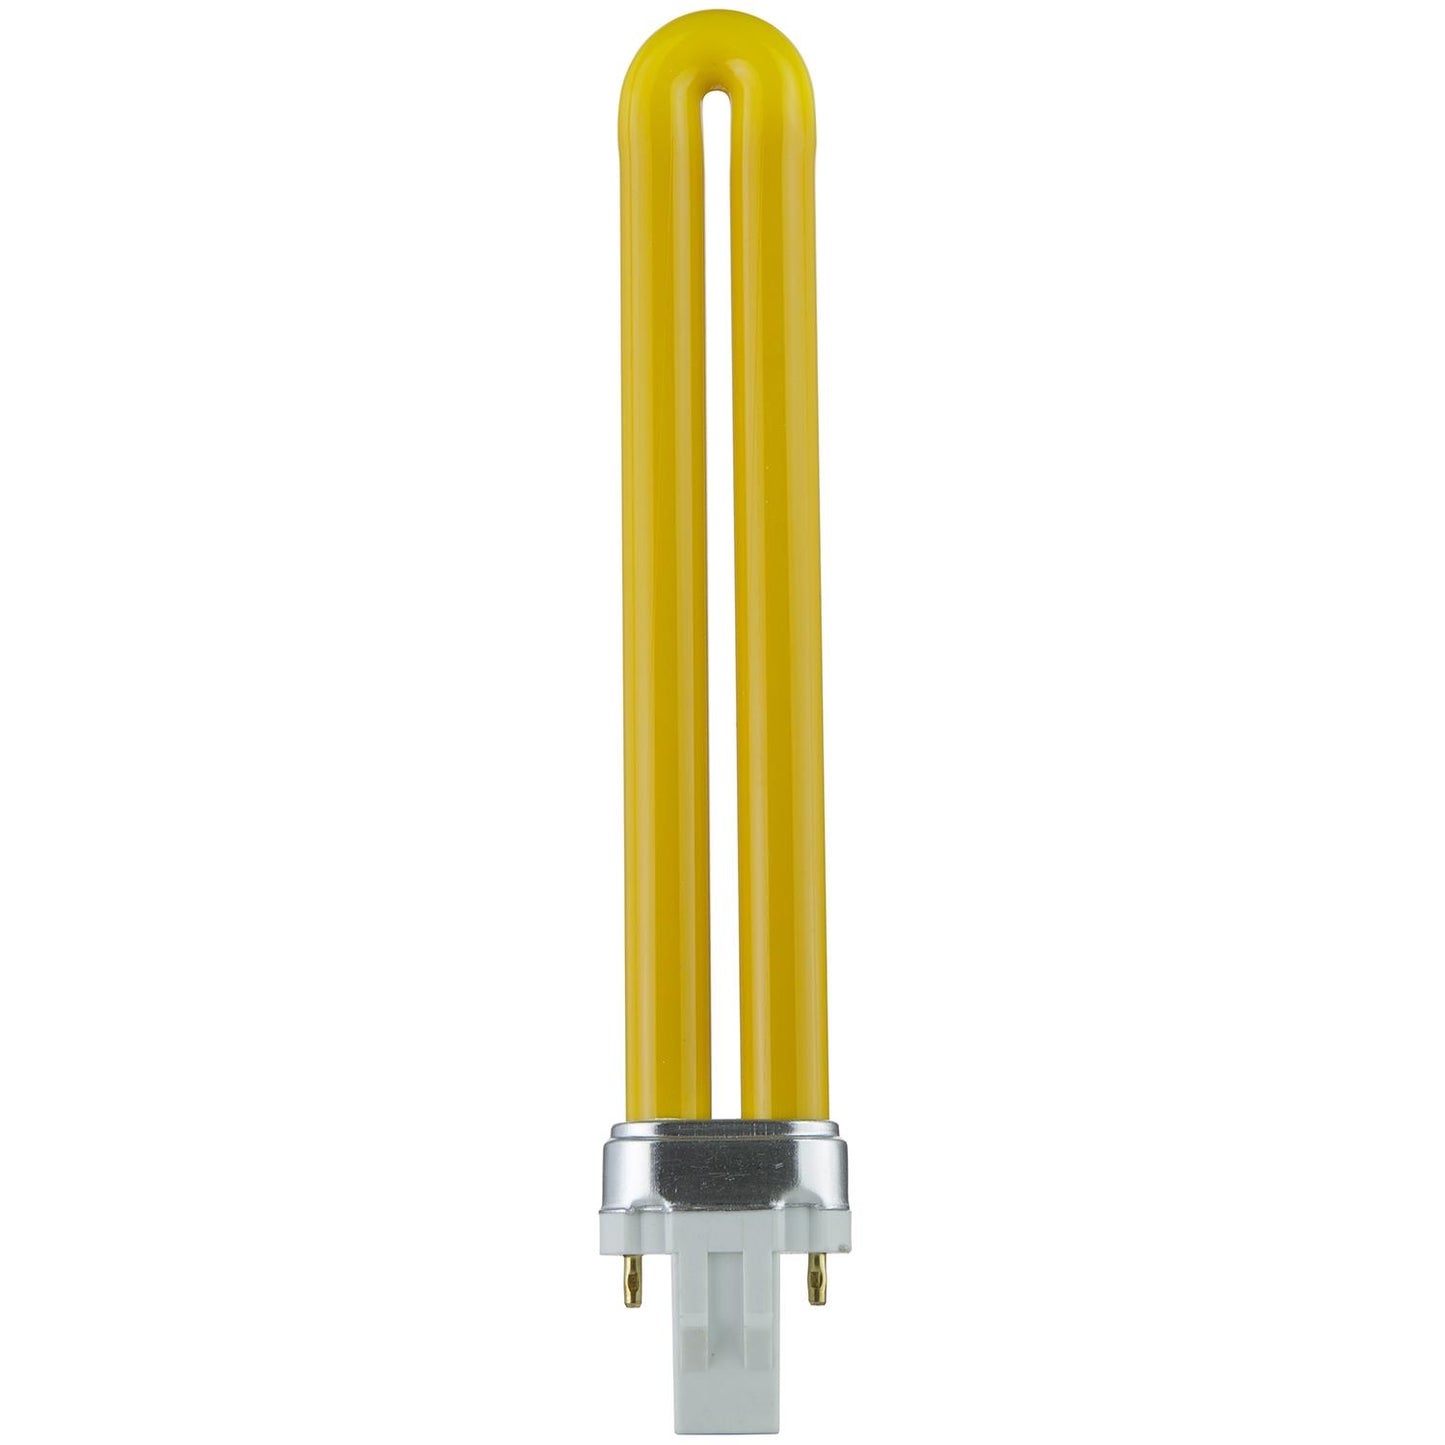 Sunlite 13 Watt PL 2-Pin Single U-Shaped Twin Tube, GX23 Base, Yellow